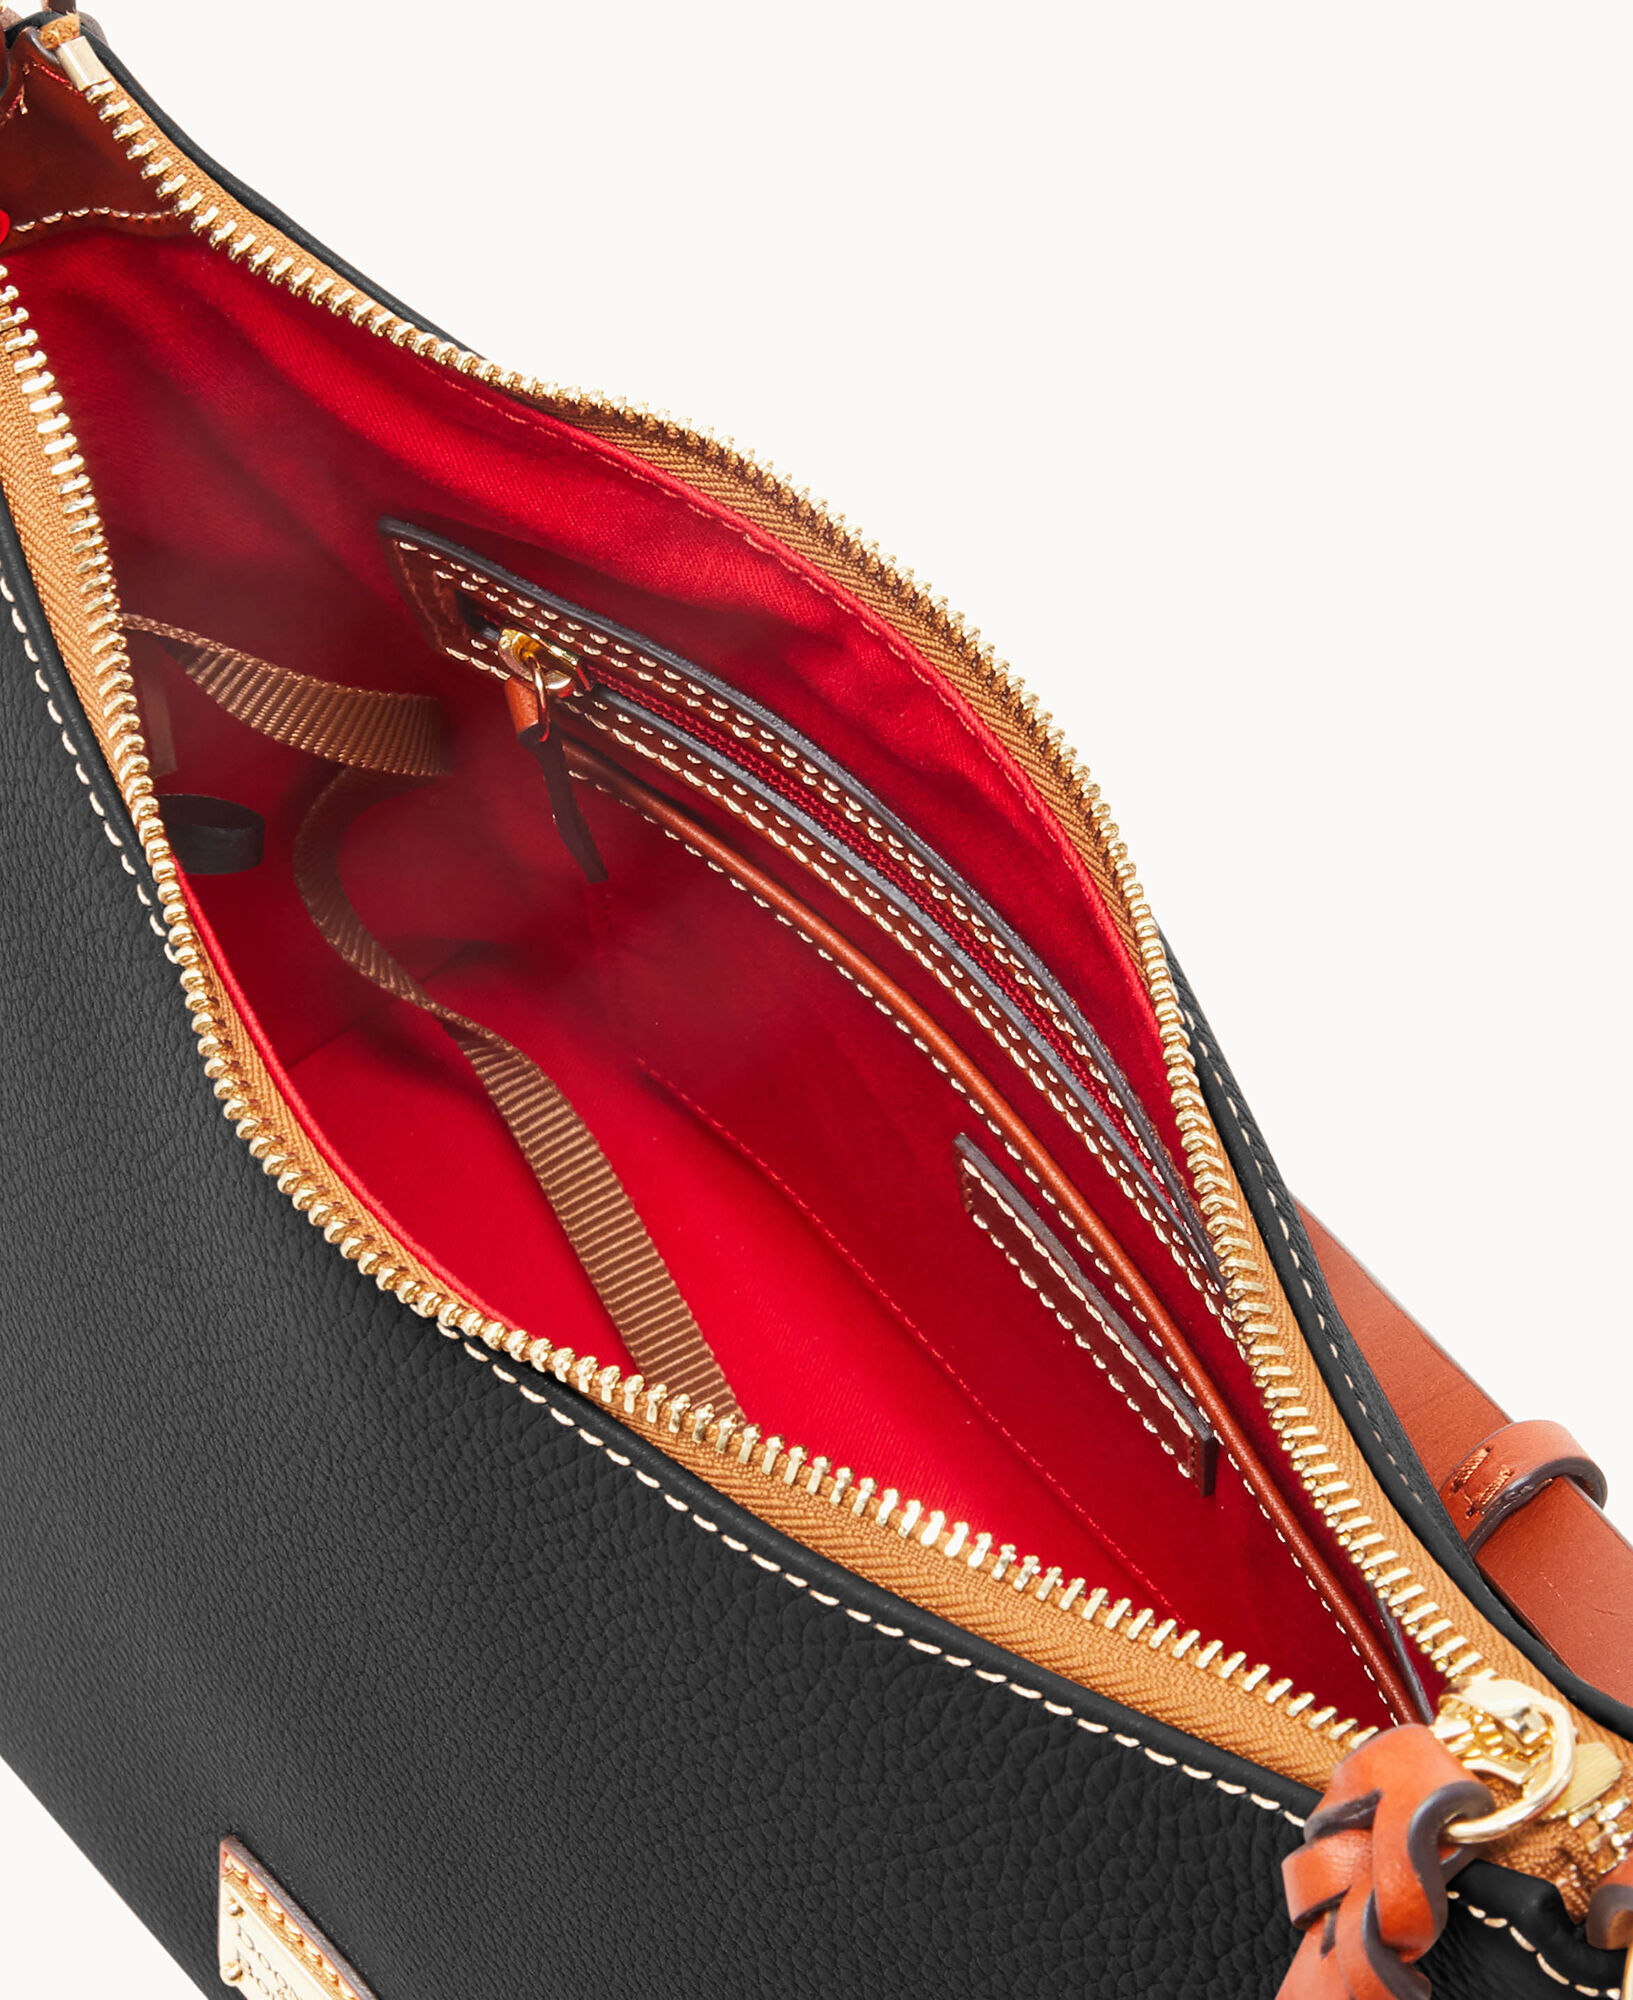 Dooney & Bourke Handbag, Pebble Grain Hobo Shoulder Bag - Caramel:  Handbags